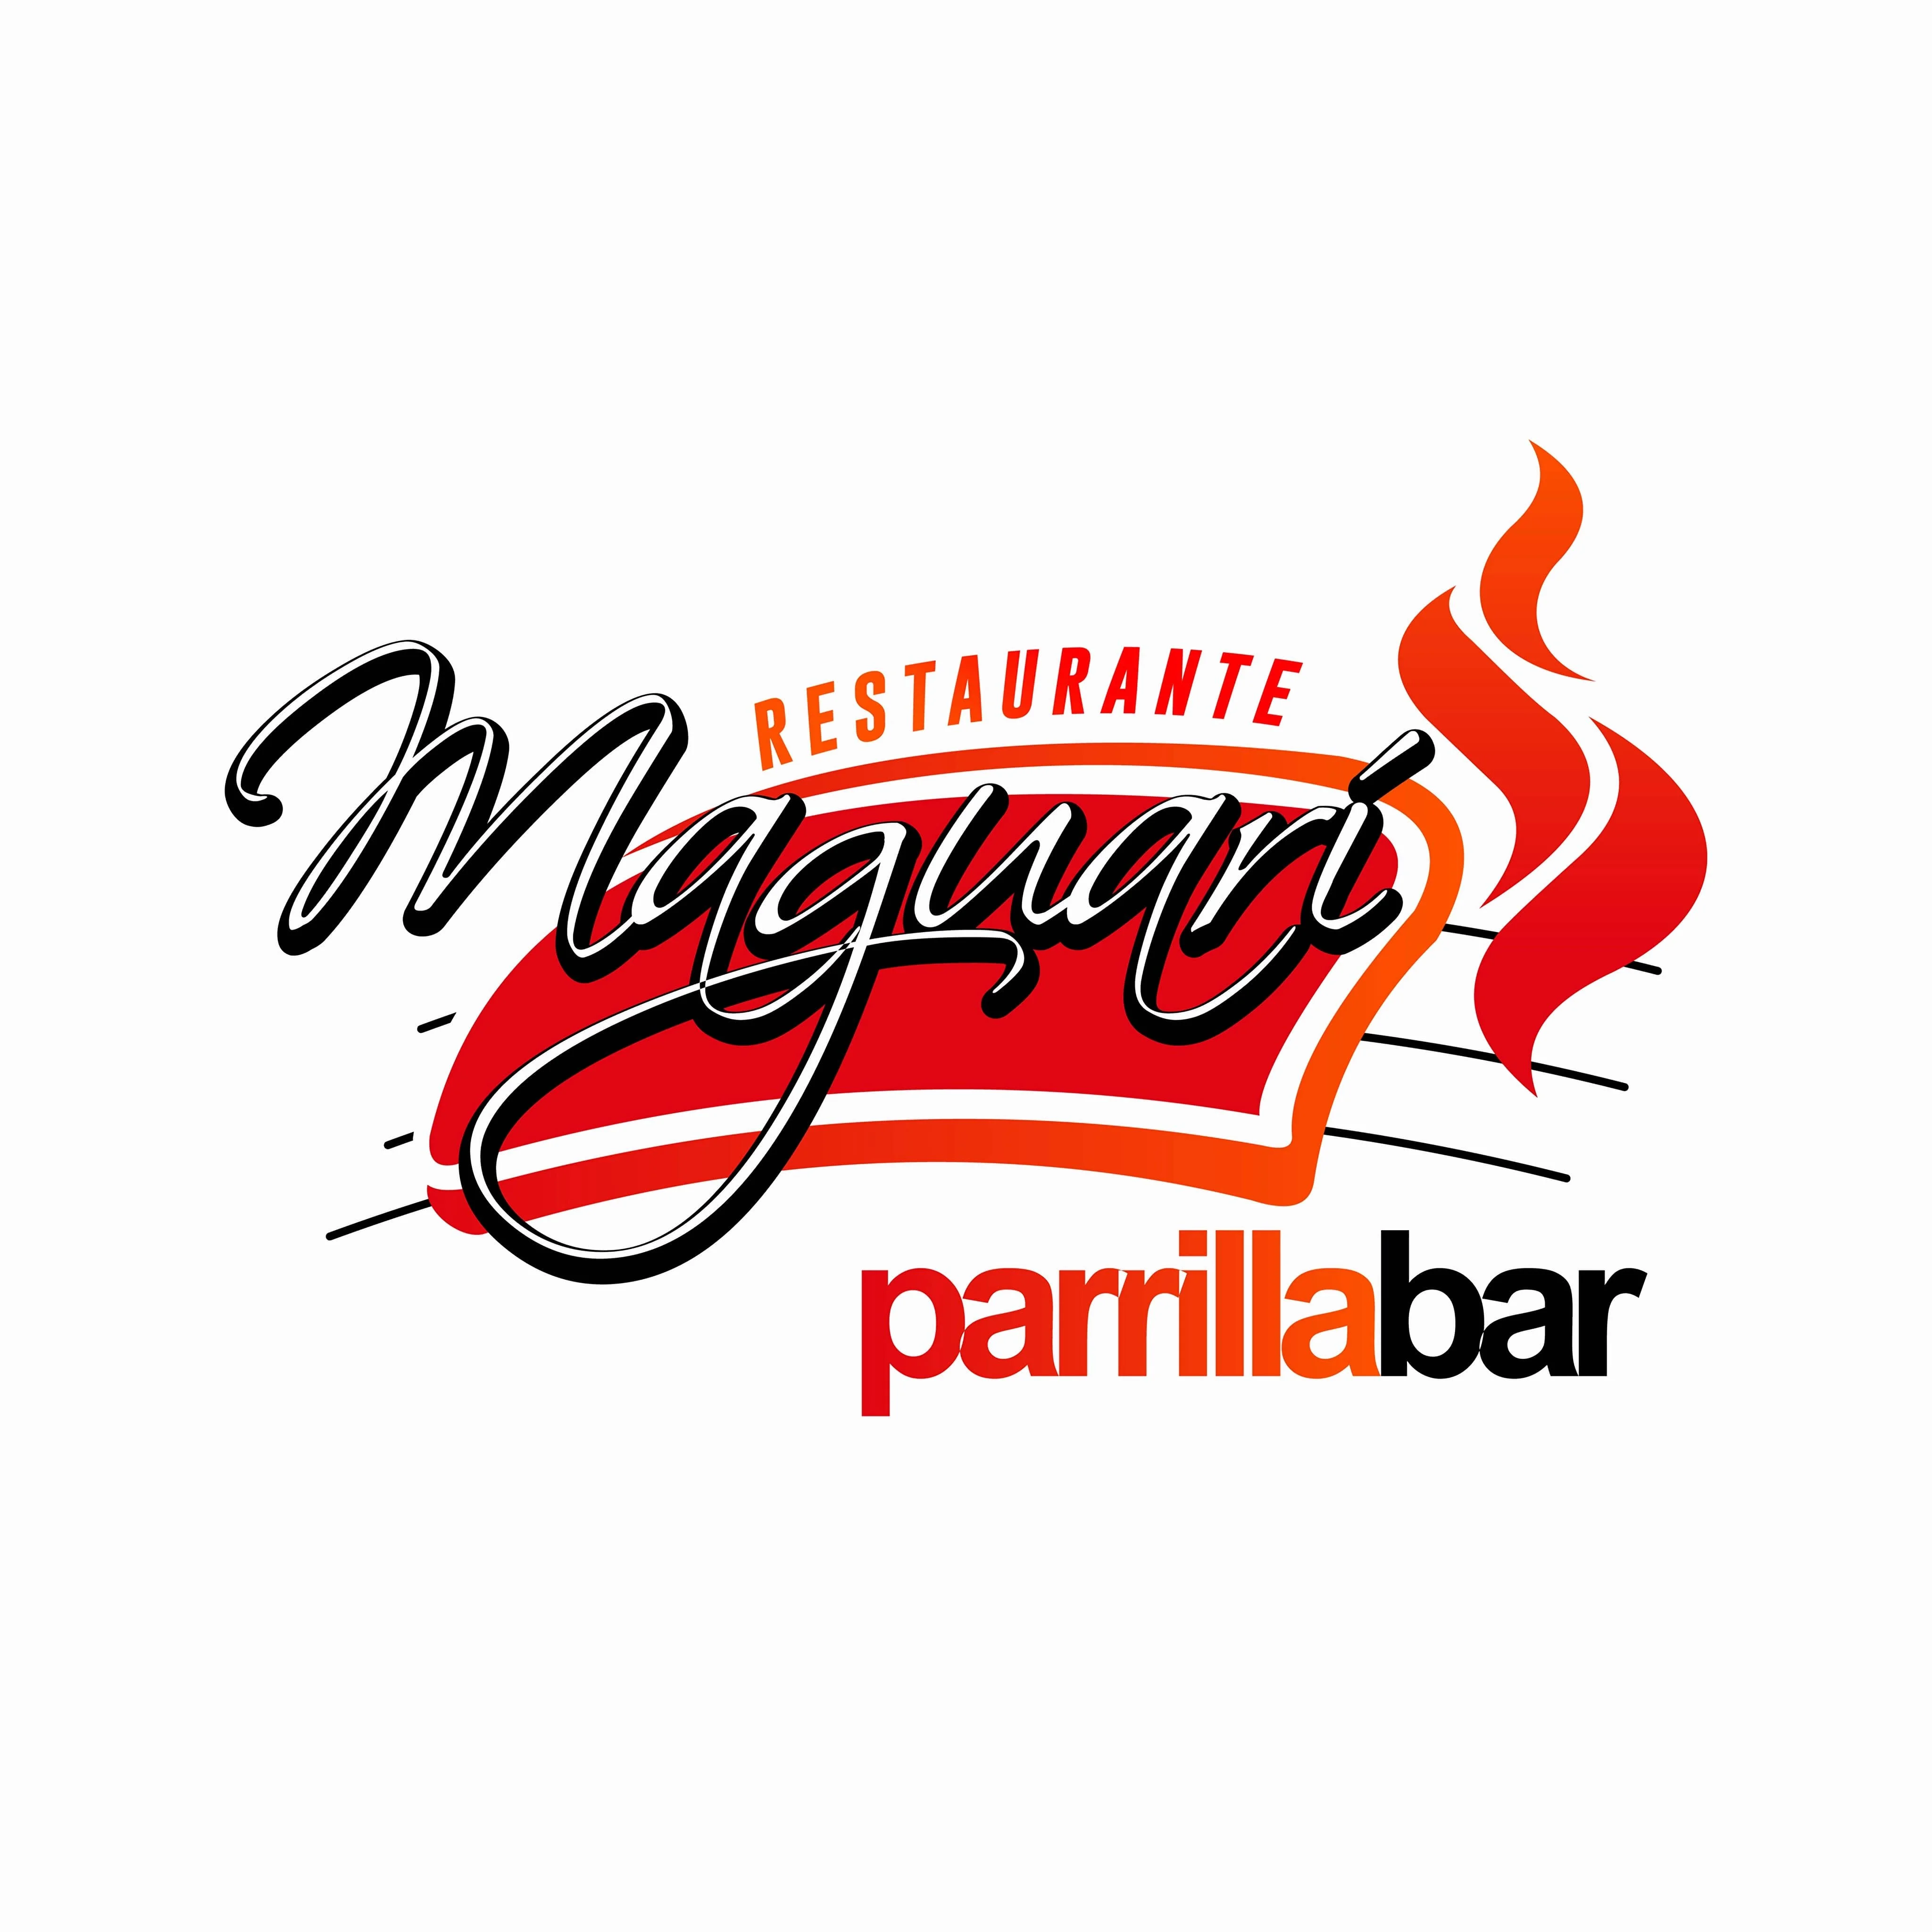 Restaurante-maguari-parrillabar-25342